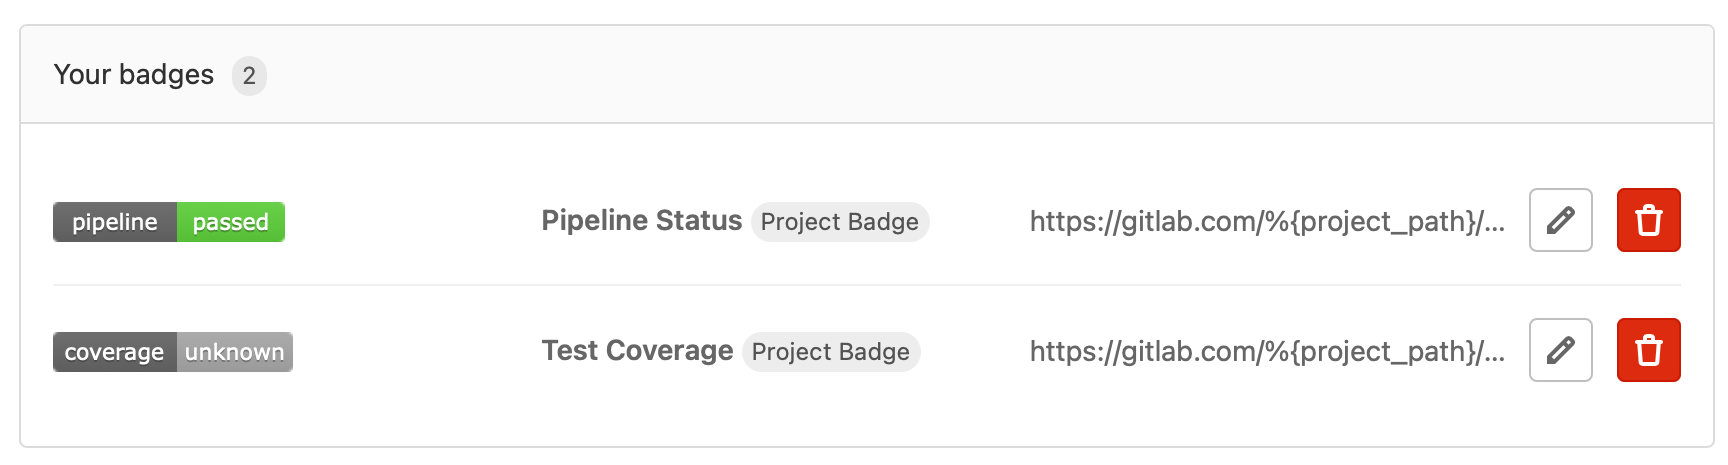 GitLab: Badge Status